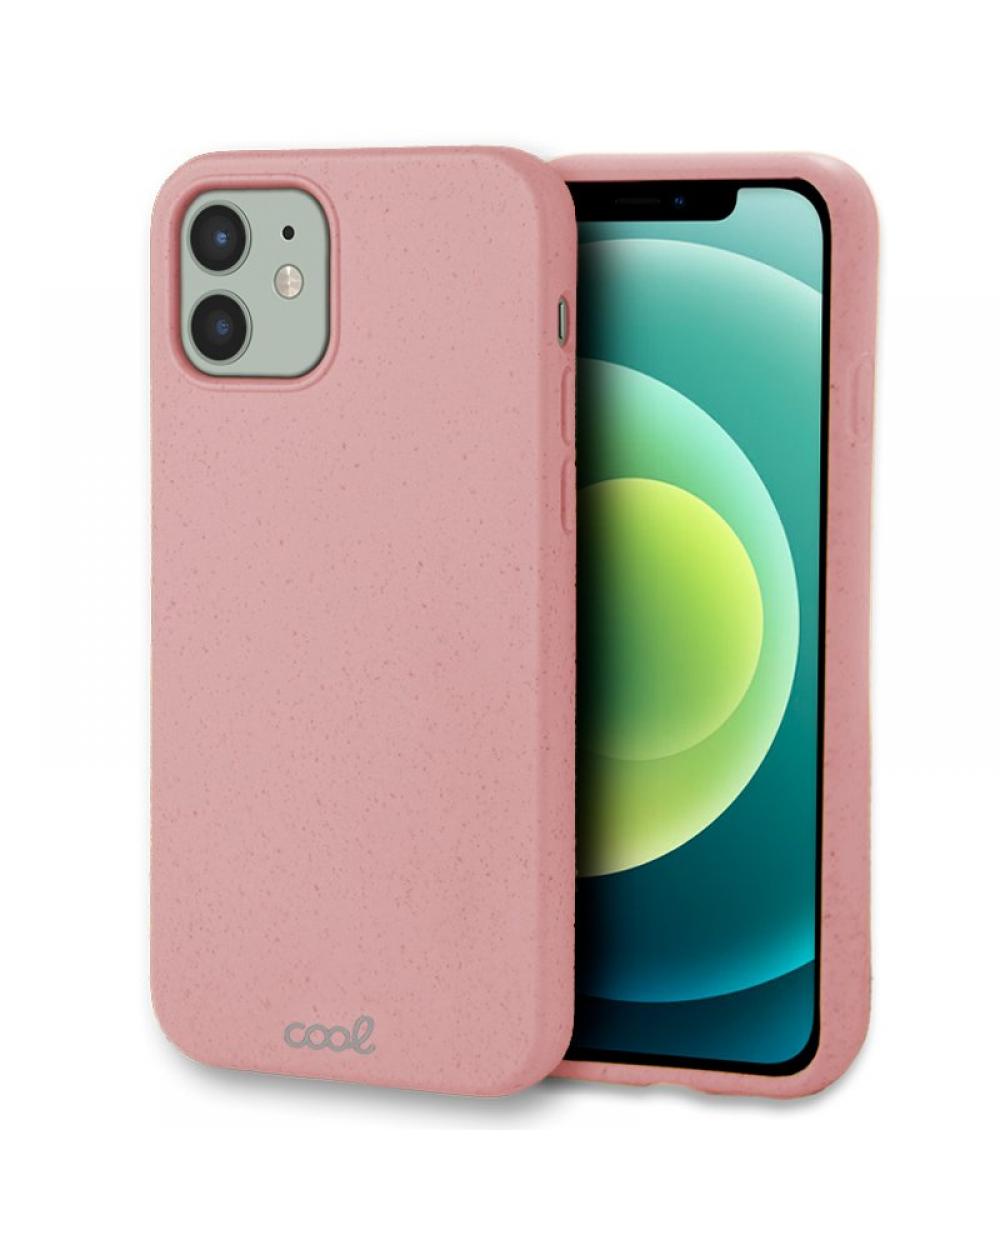 Carcasa COOL para iPhone 12 / 12 Pro Eco Biodegradable Rosa - Imagen 1